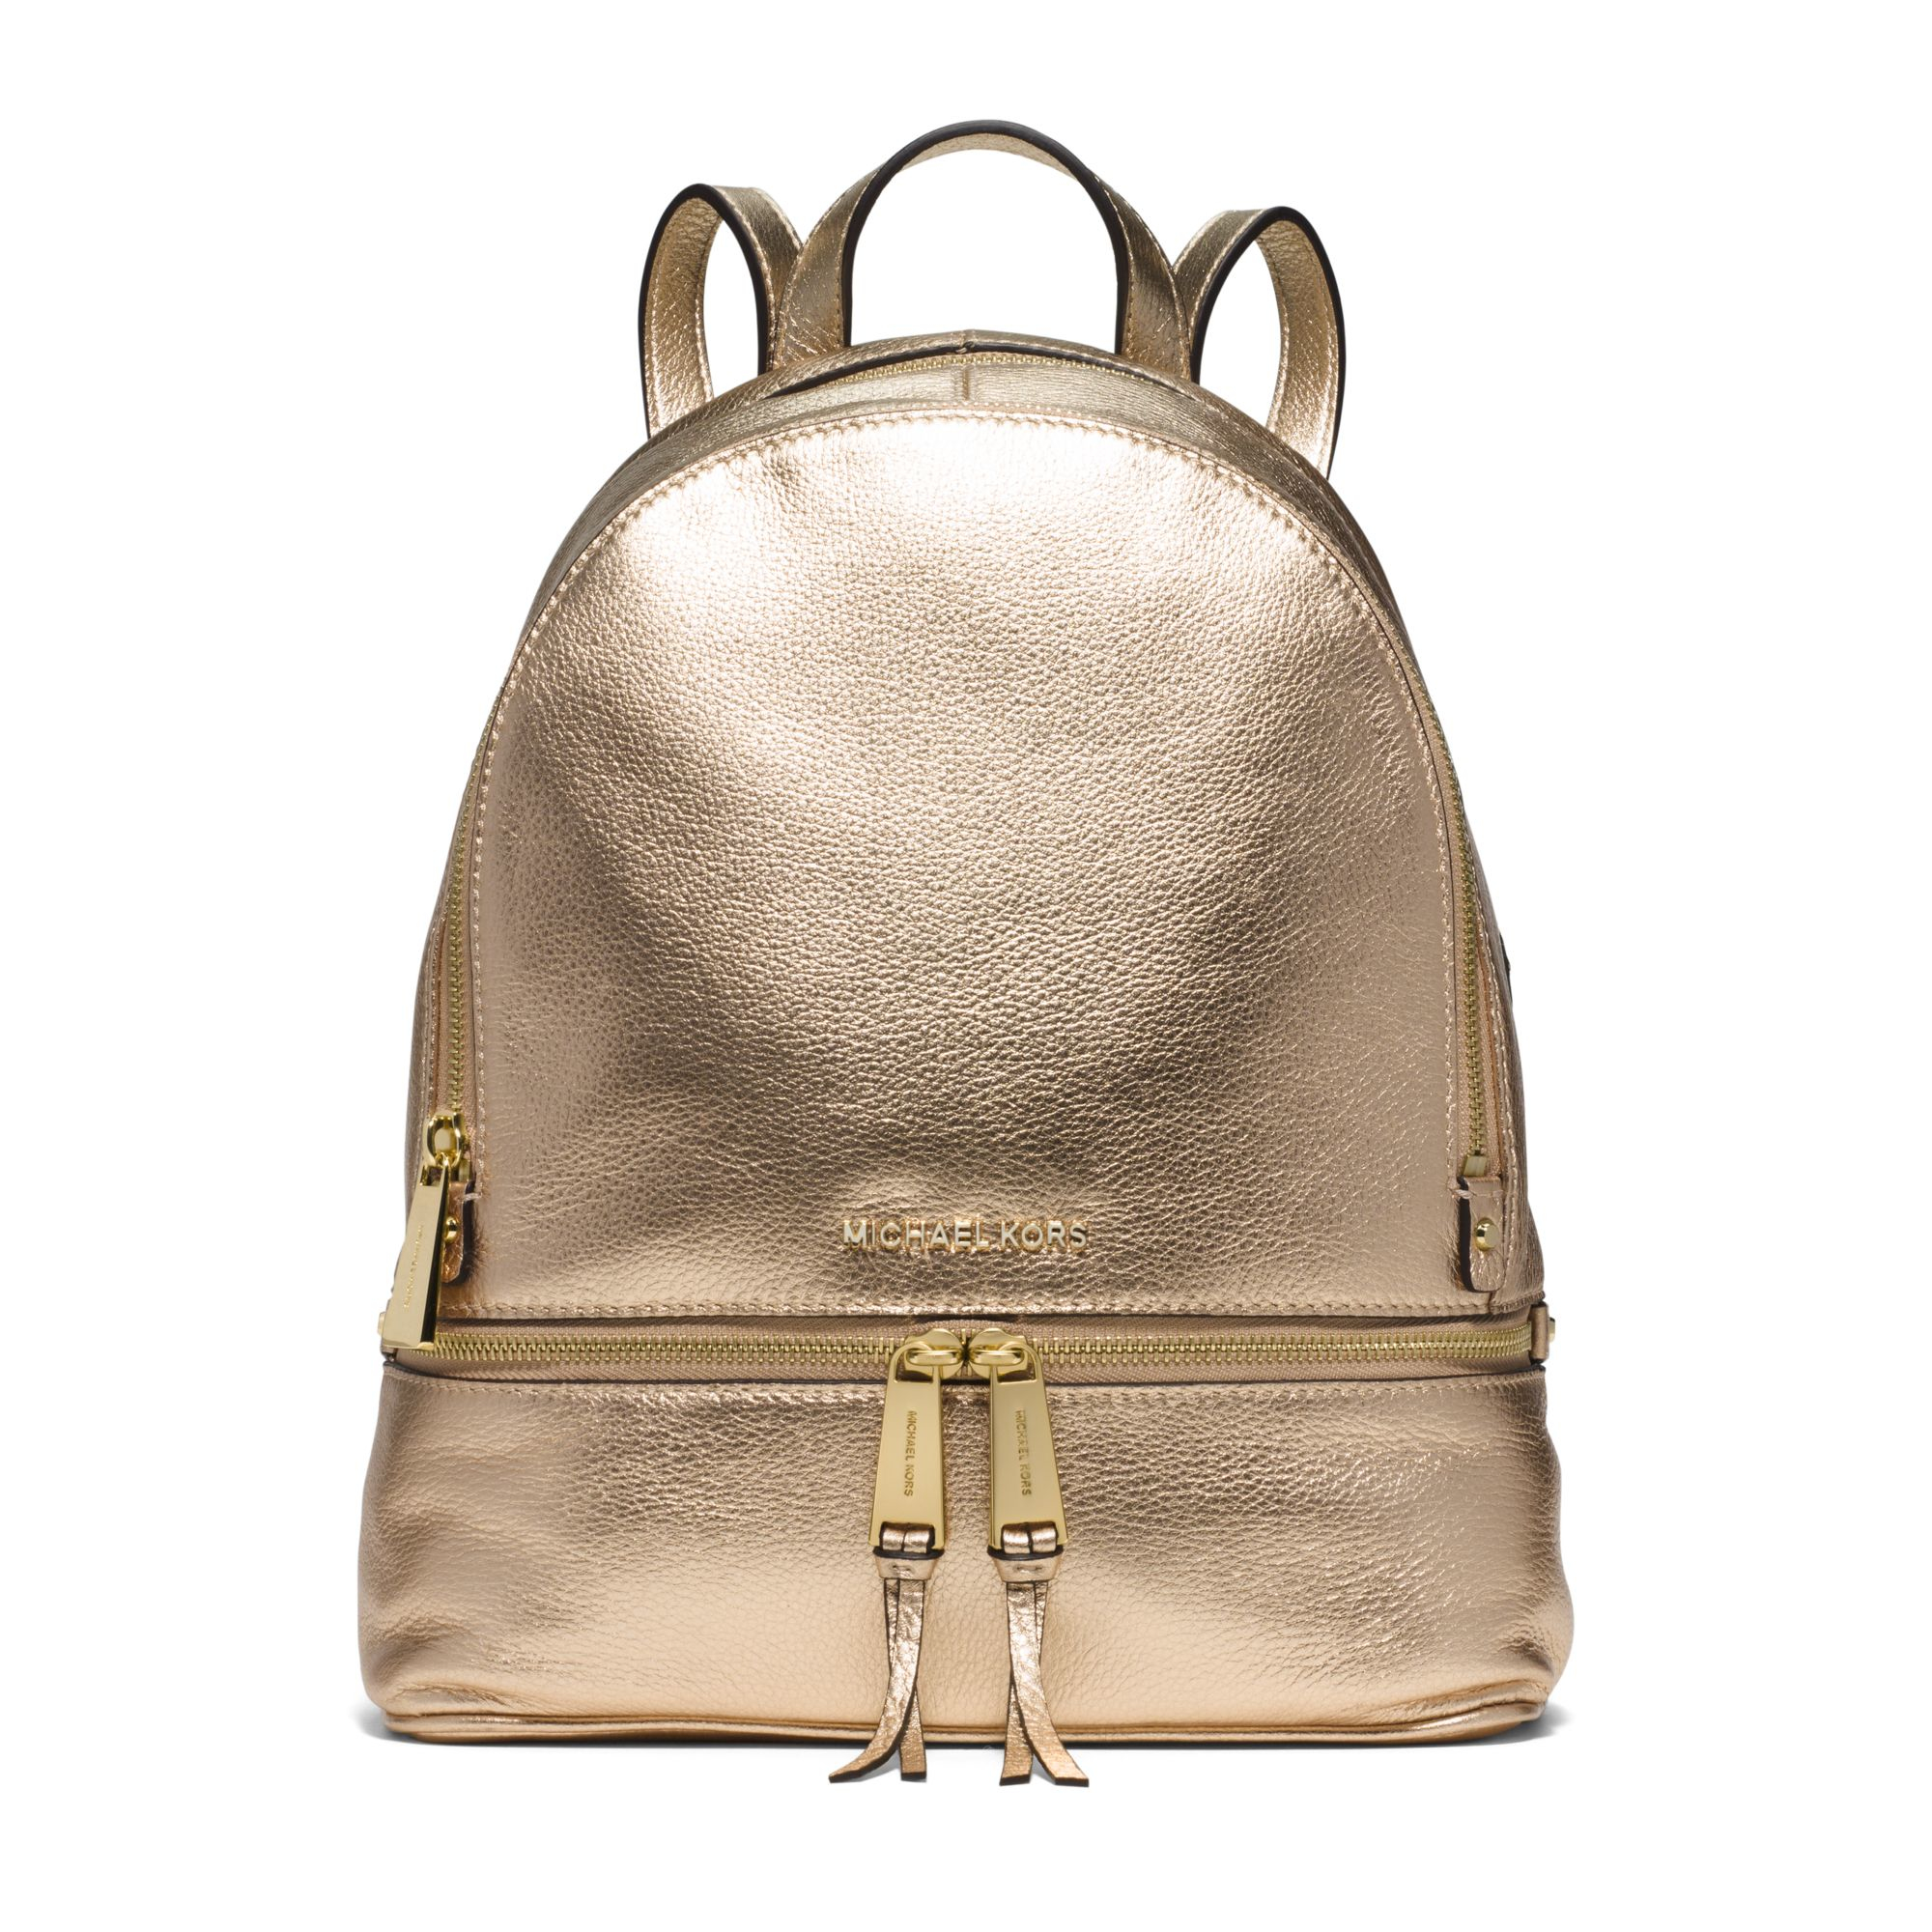 michael kors gold backpack